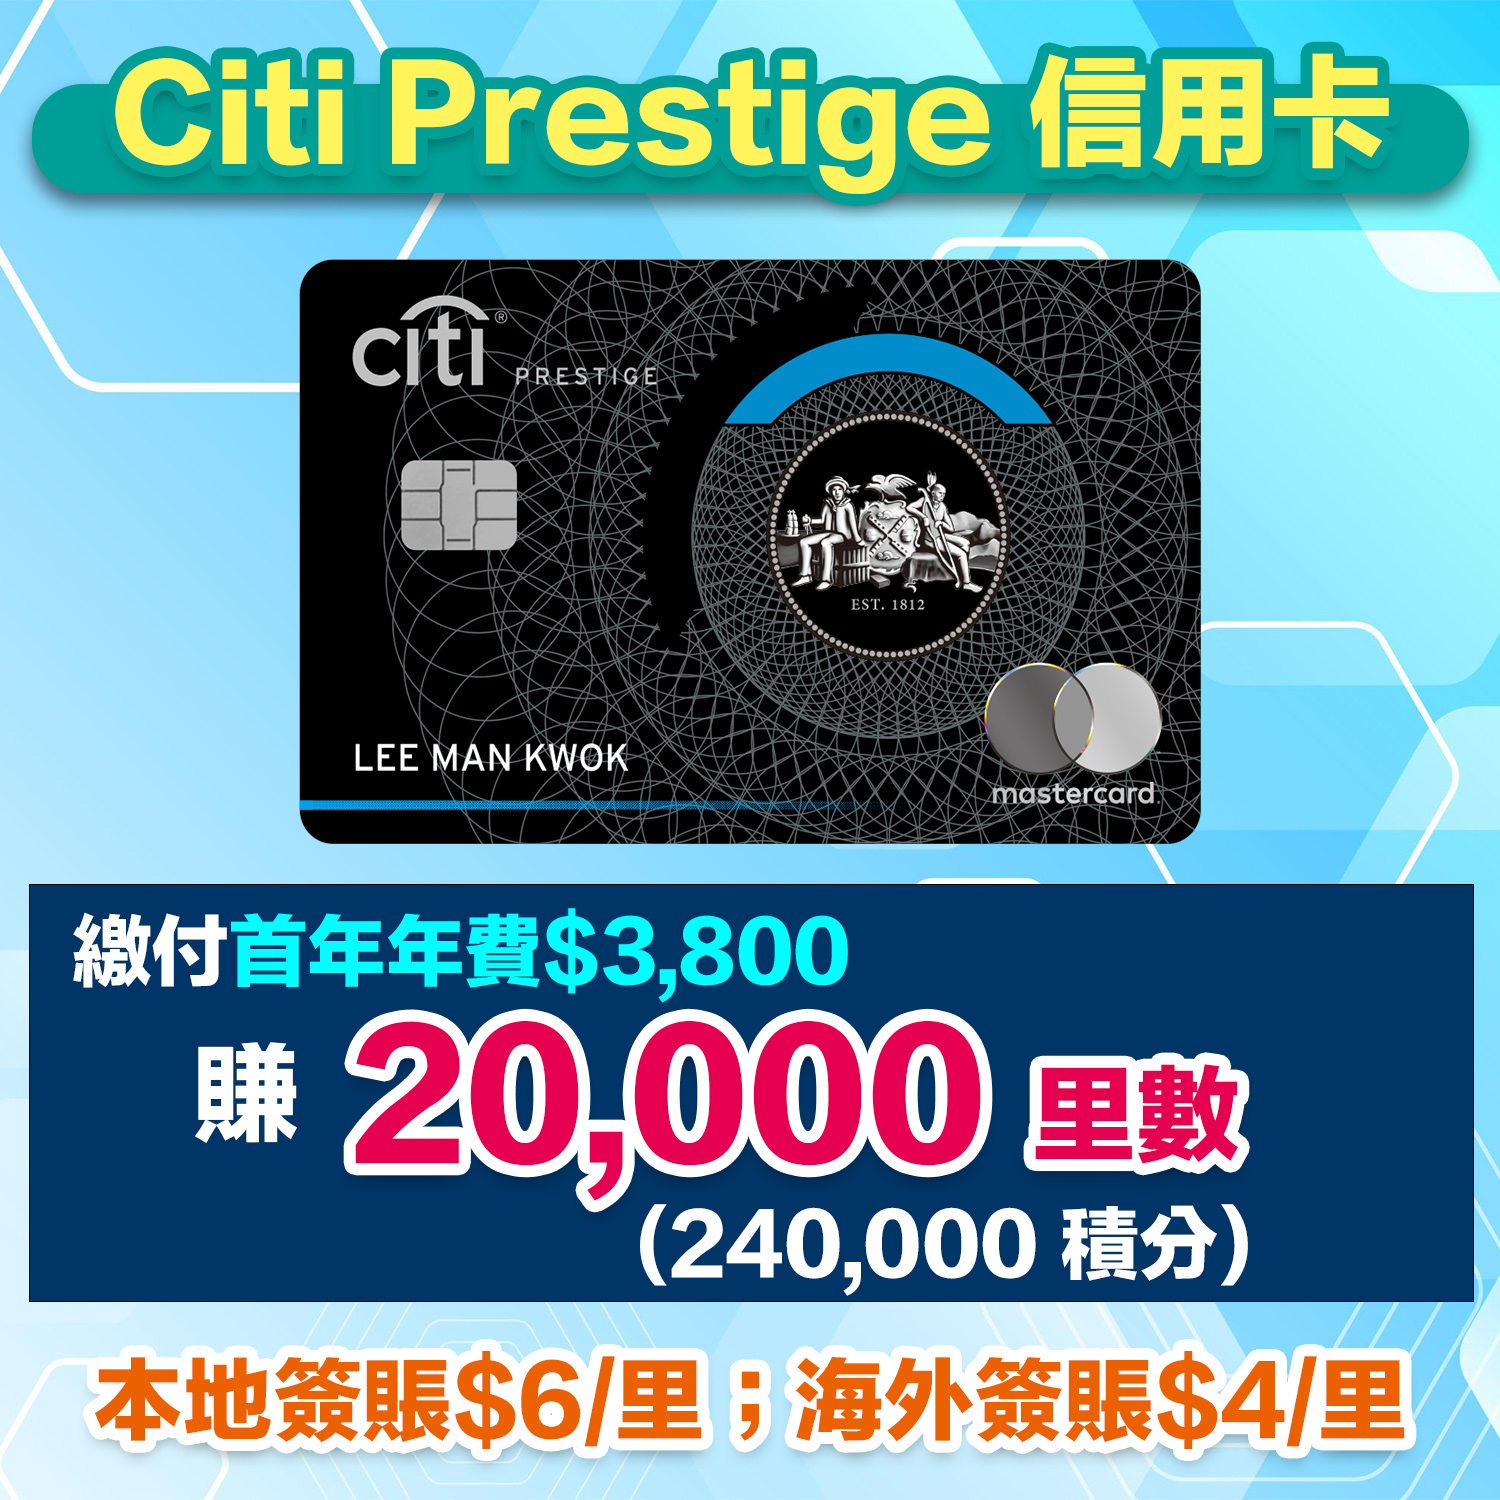 【Citi Prestige 信用卡】本地5星酒店住1晚送1晚 米芝蓮官方合作夥伴 平日HK$6=1里可換多個里數計劃！年費HK$3,800 里先生送額外HK$1,800 Apple 禮品卡/超市現金券/豐澤電子現金券！